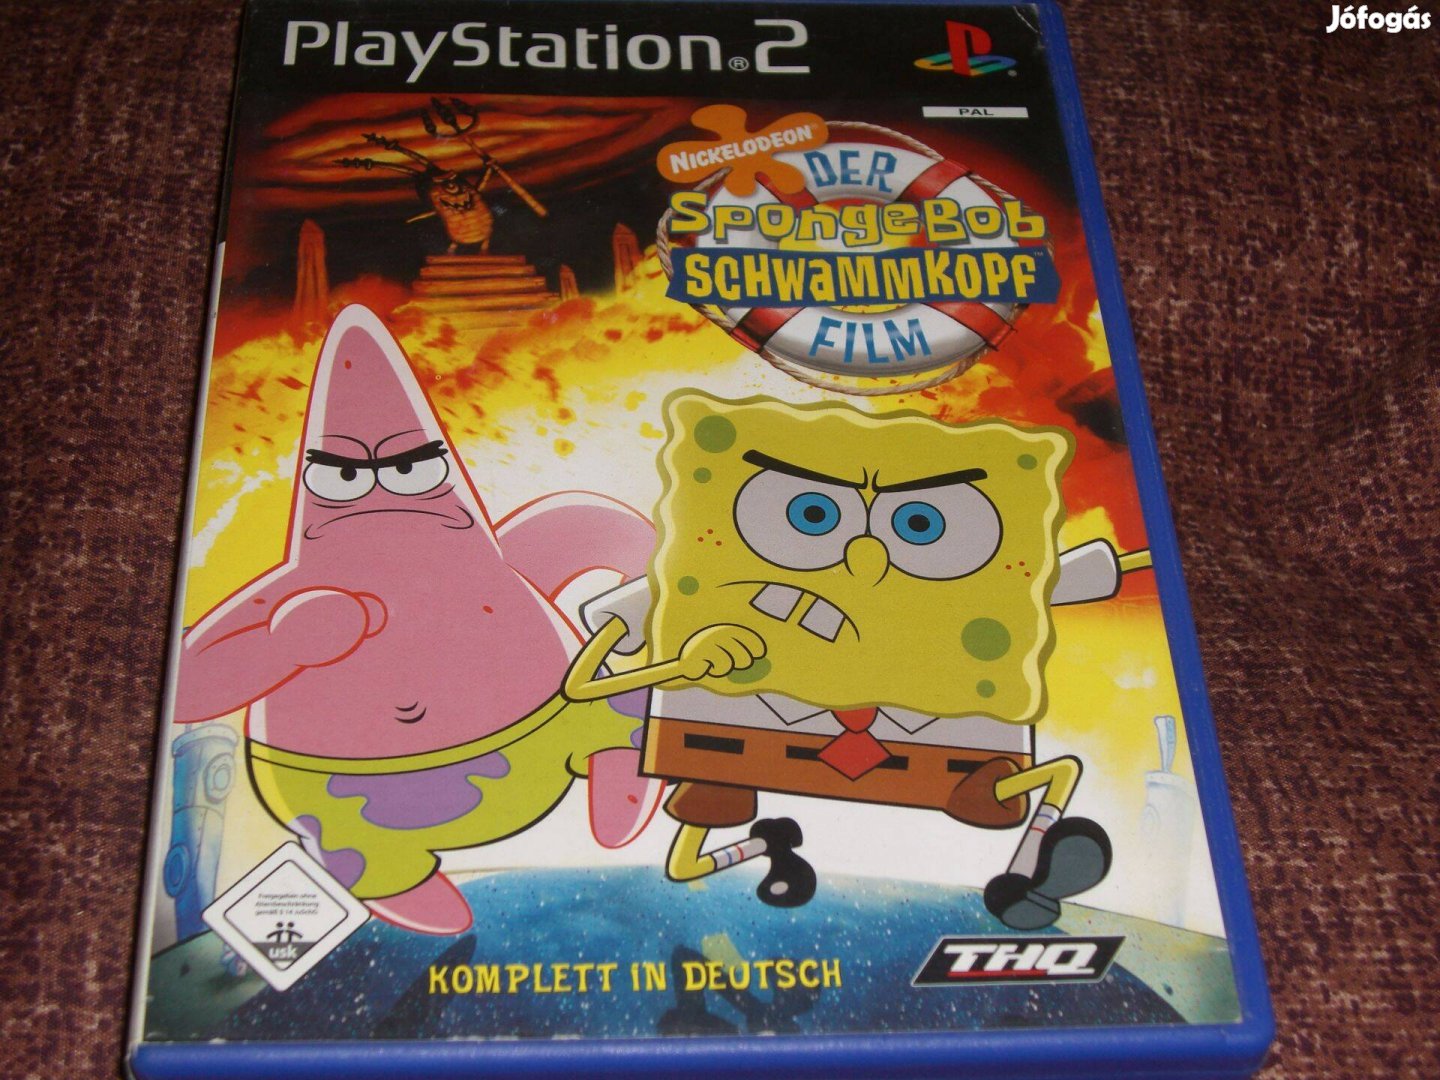 Spongebob Schwammkopf Film Playstation 2 eredeti lemez ( 4500 Ft )